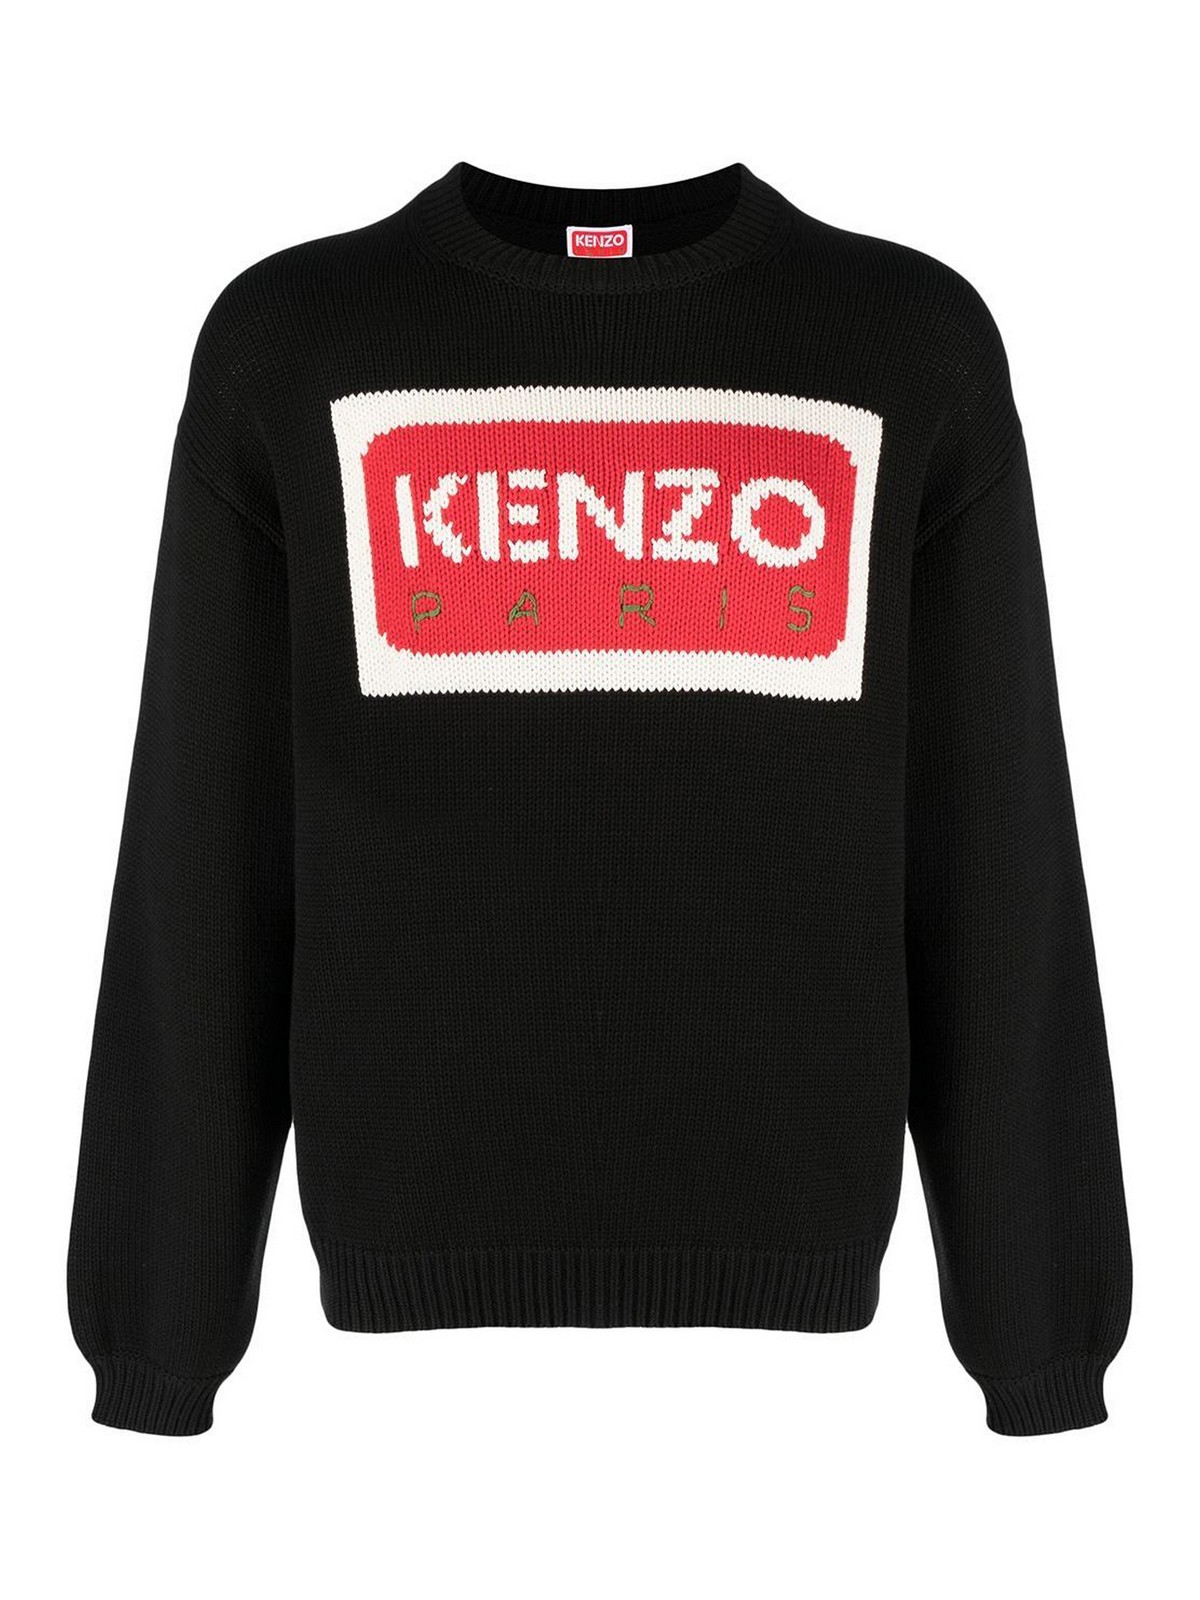 Kenzo Cotton Blend Crewneck In Black